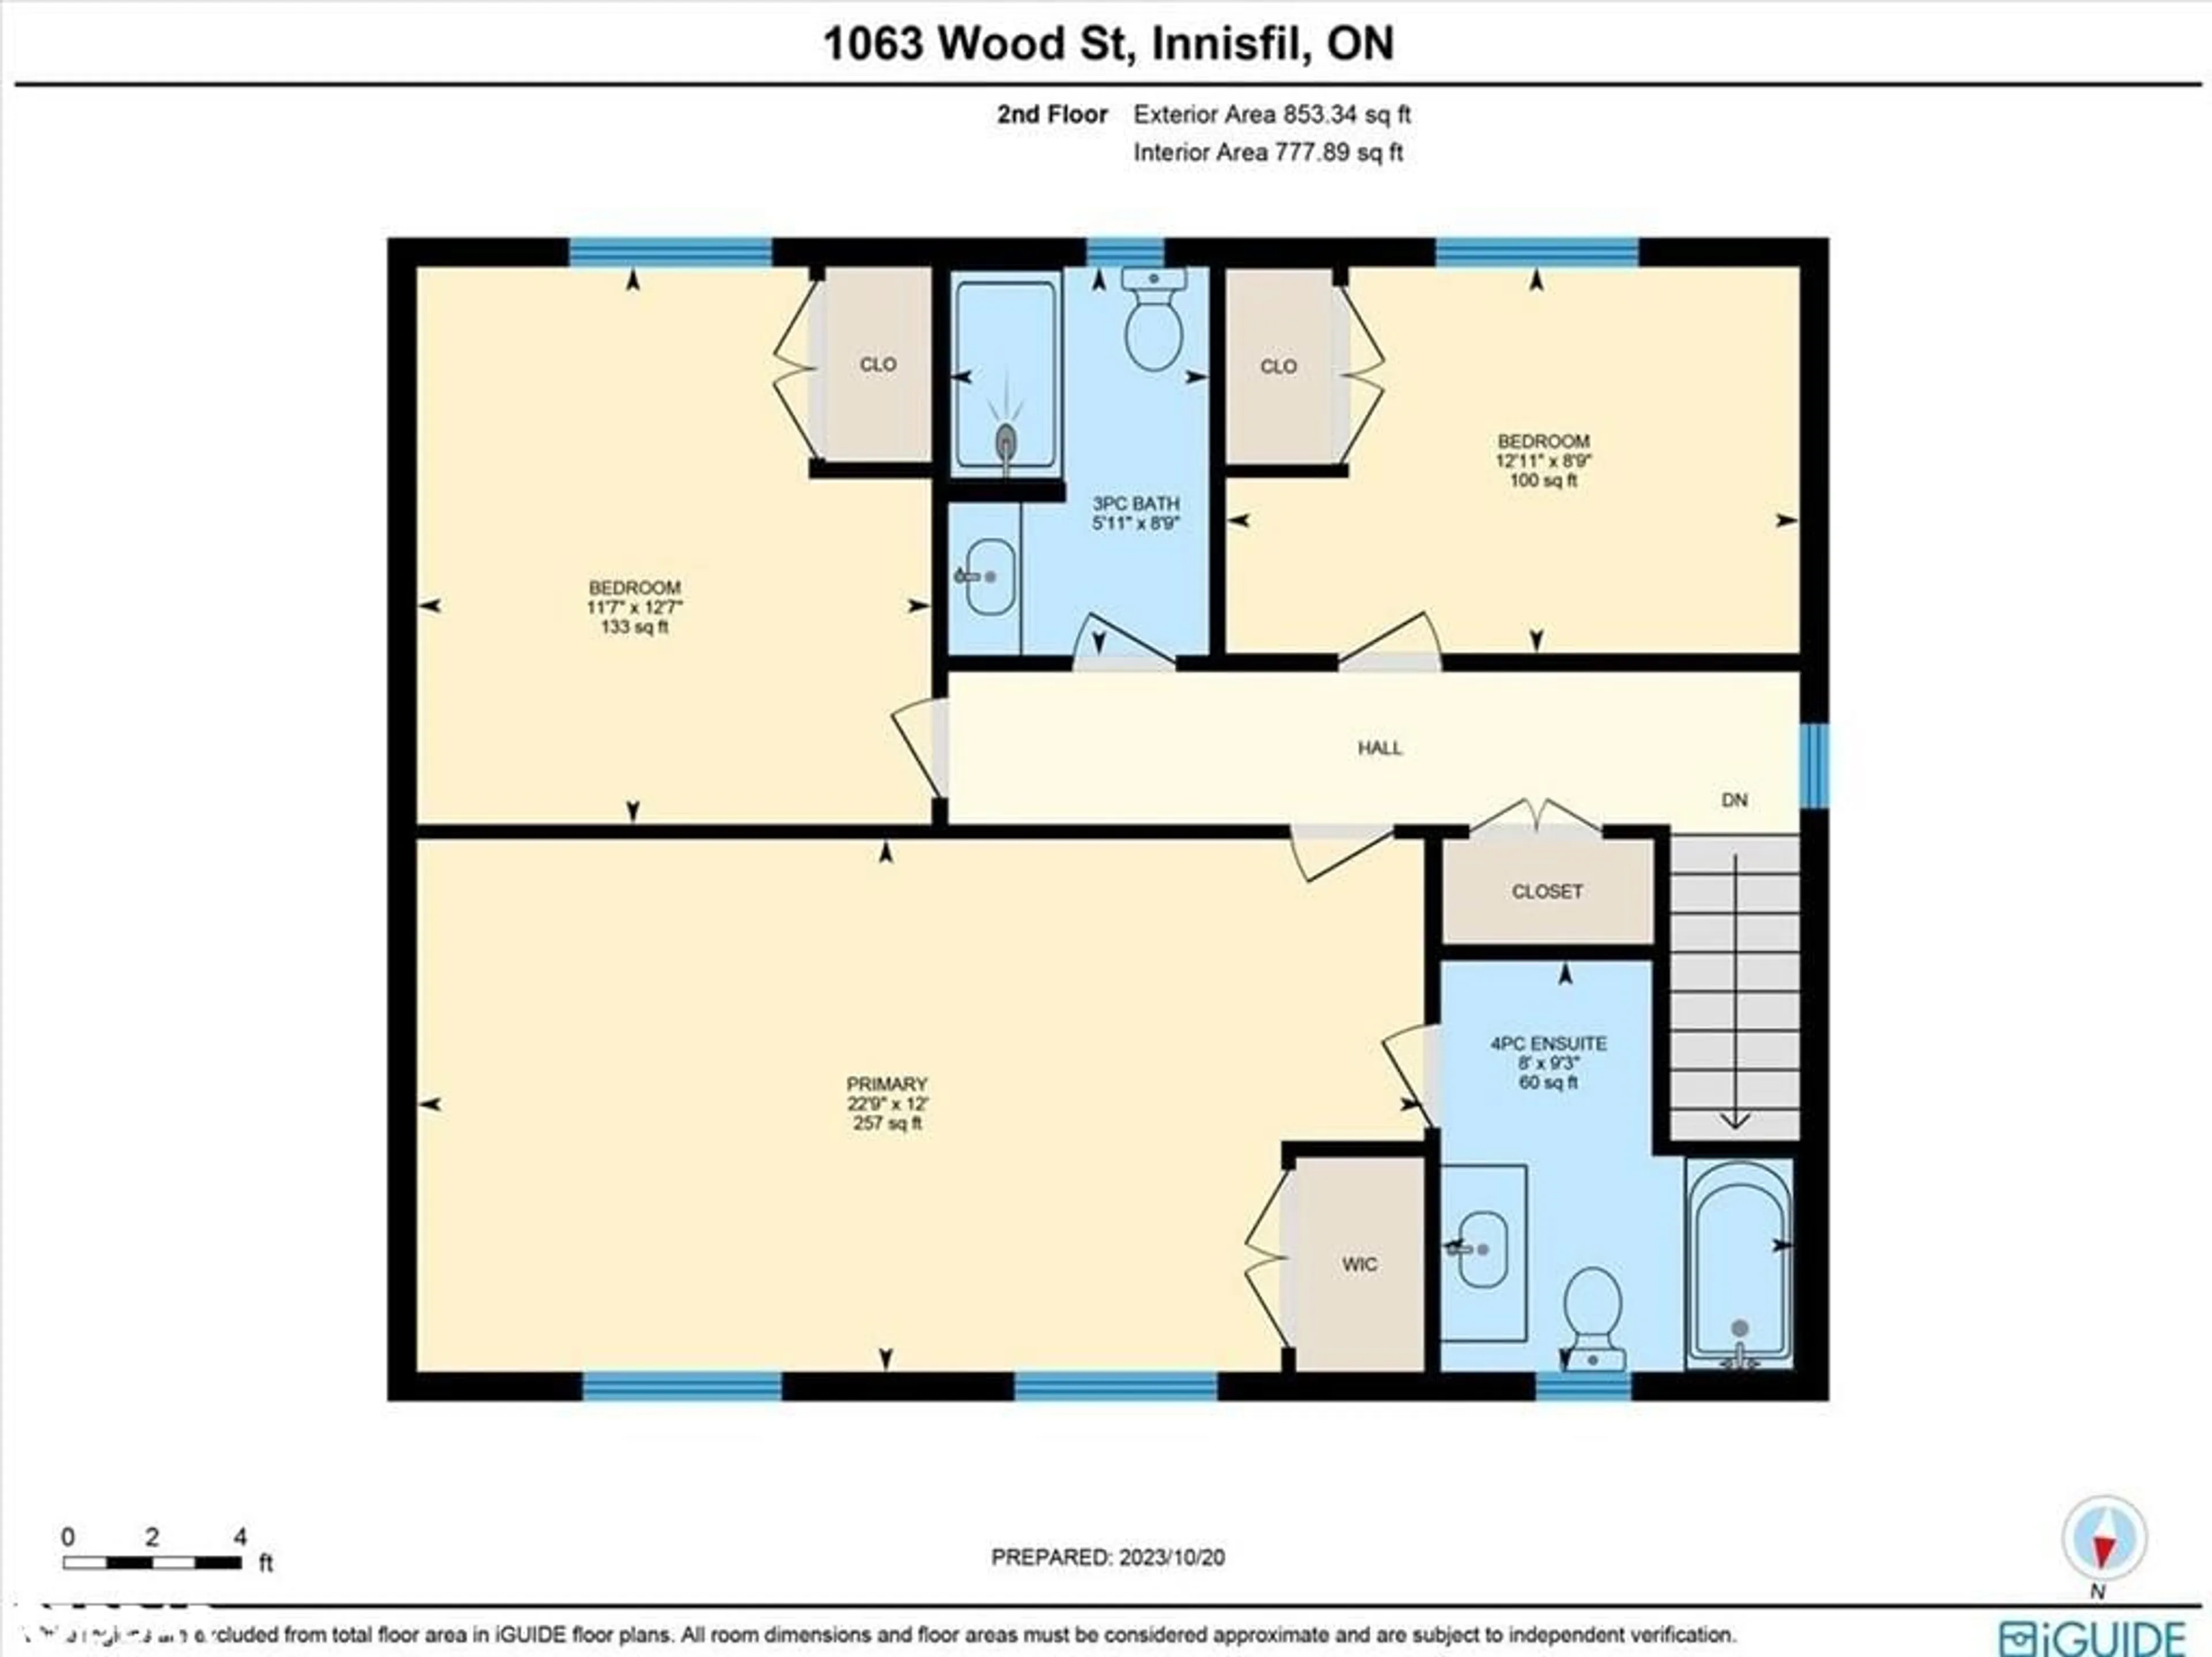 Floor plan for 1063 Wood St, Innisfil Ontario L0L 1K0